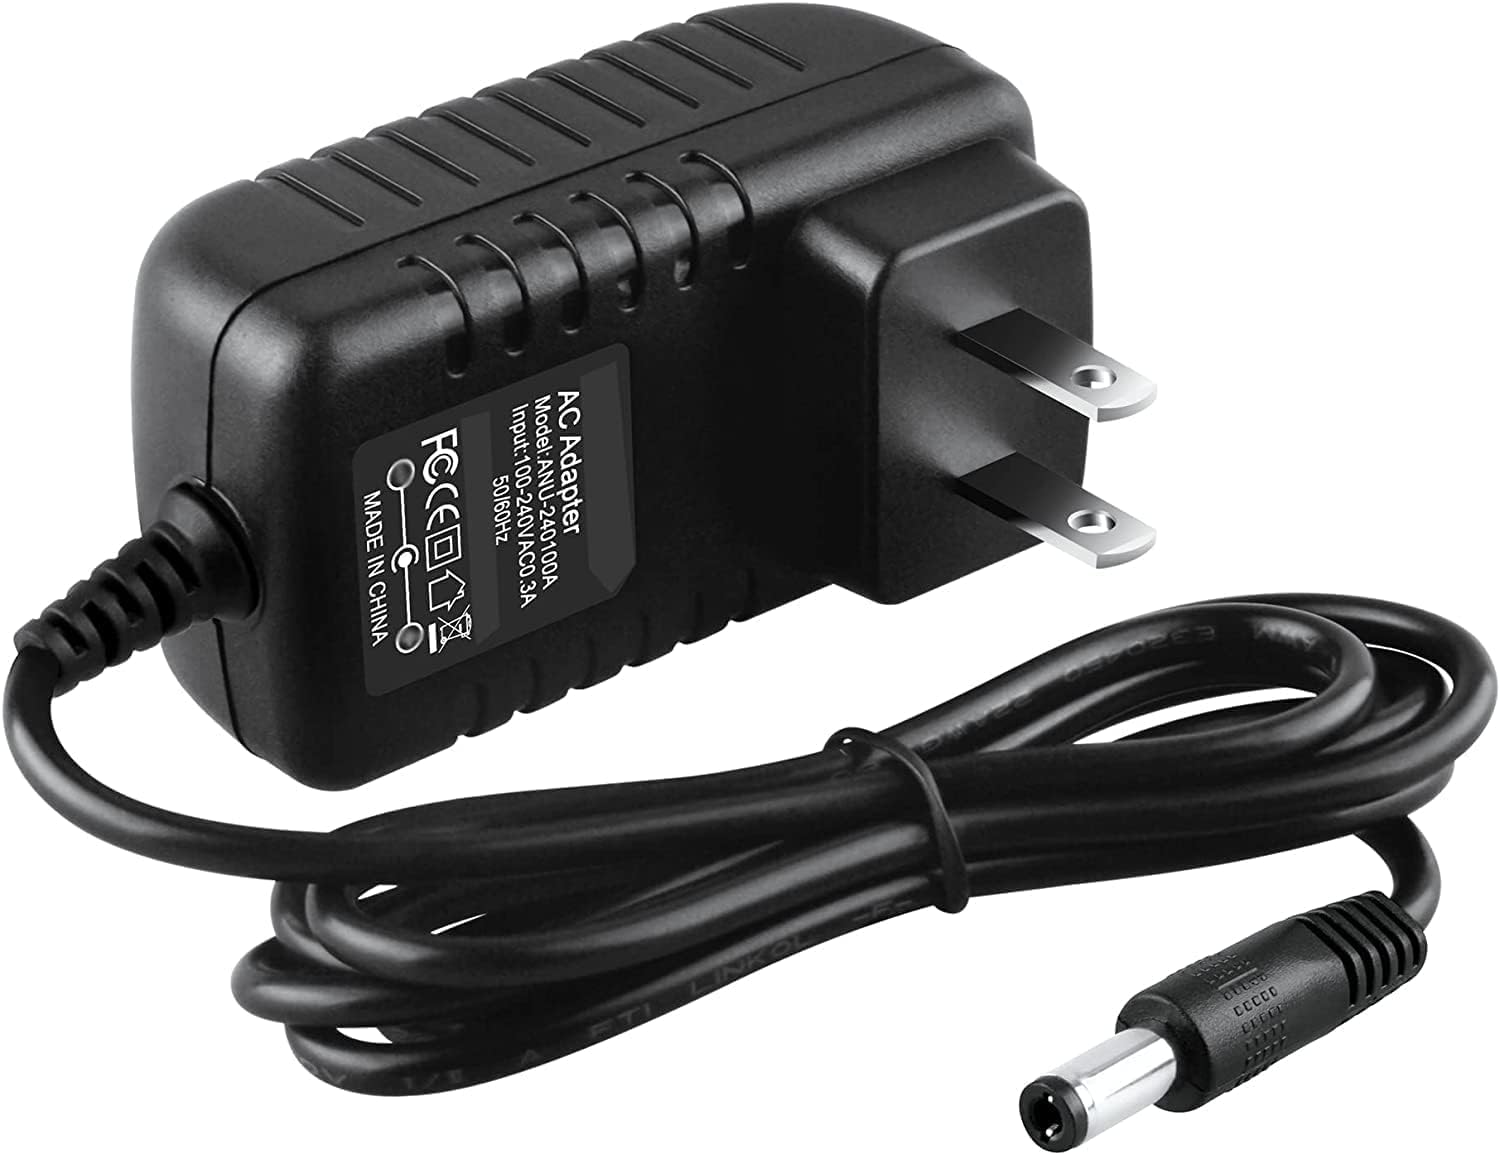  AC Adapter for Black & Decker Drill GC9600 GC960